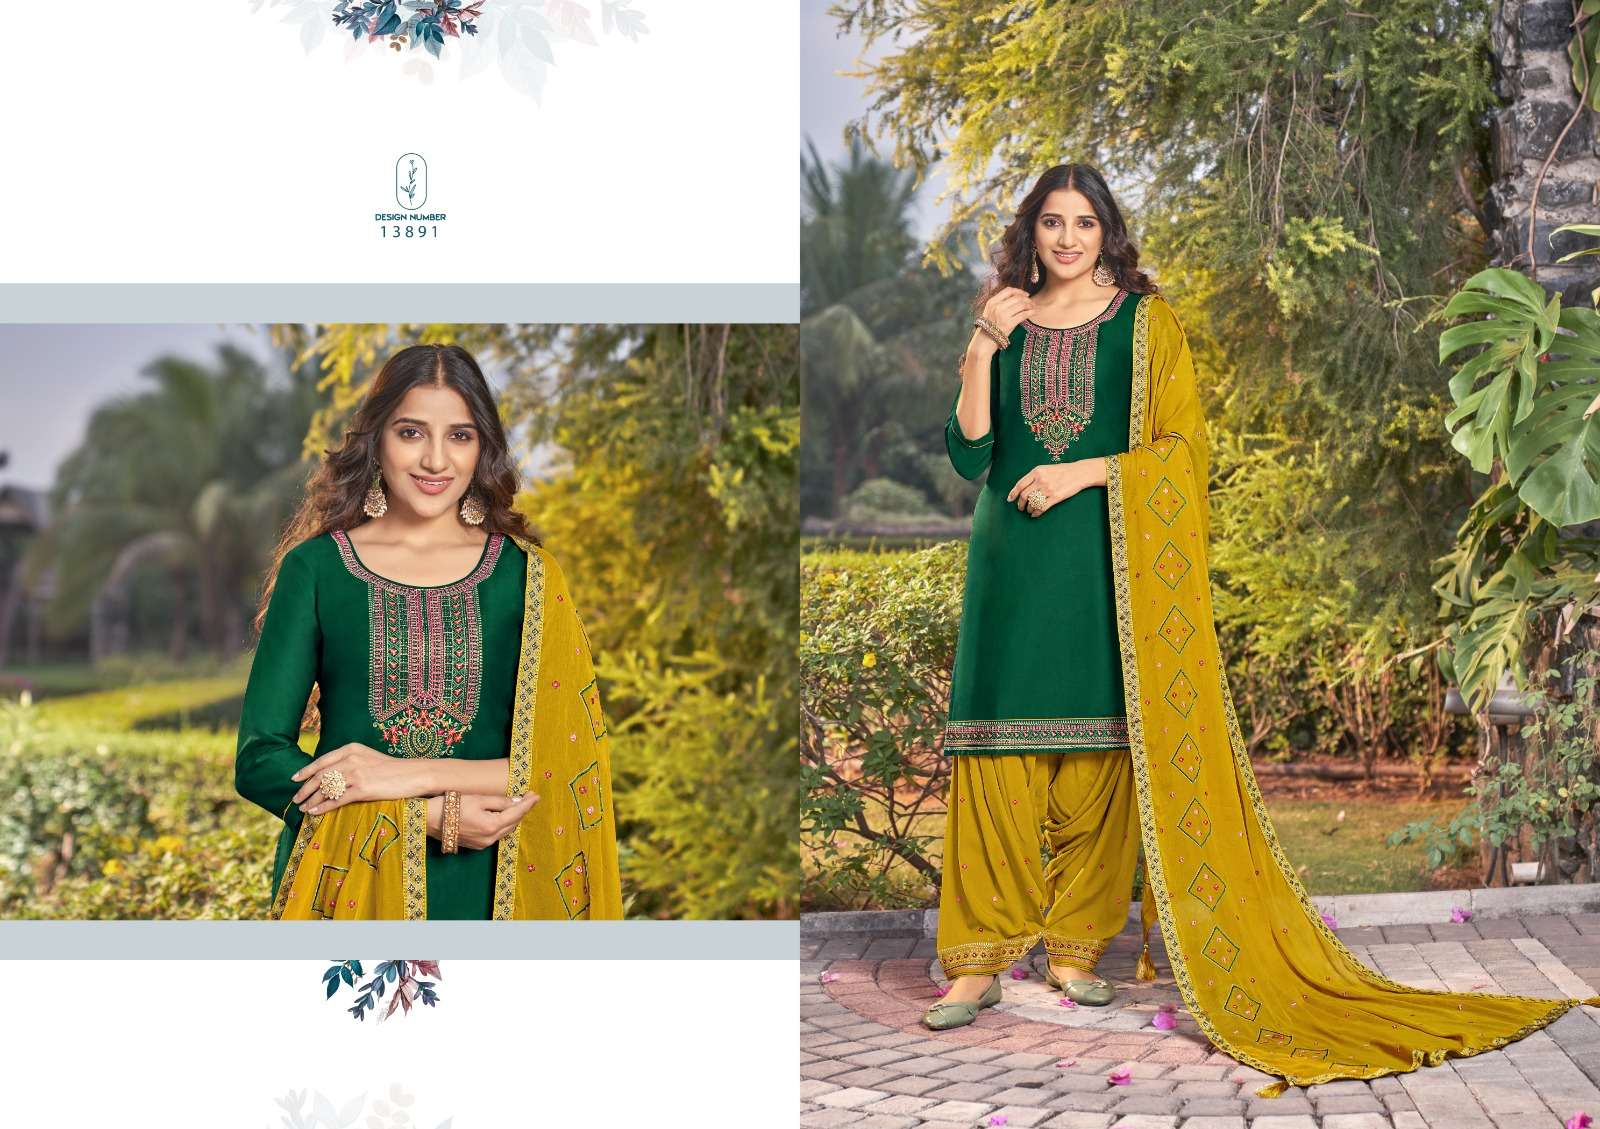 Fashion Of Patiala Vol - 35 Buy Kalaroop Wholesale Online Lowest Patiala Jam Silk Readymade Set